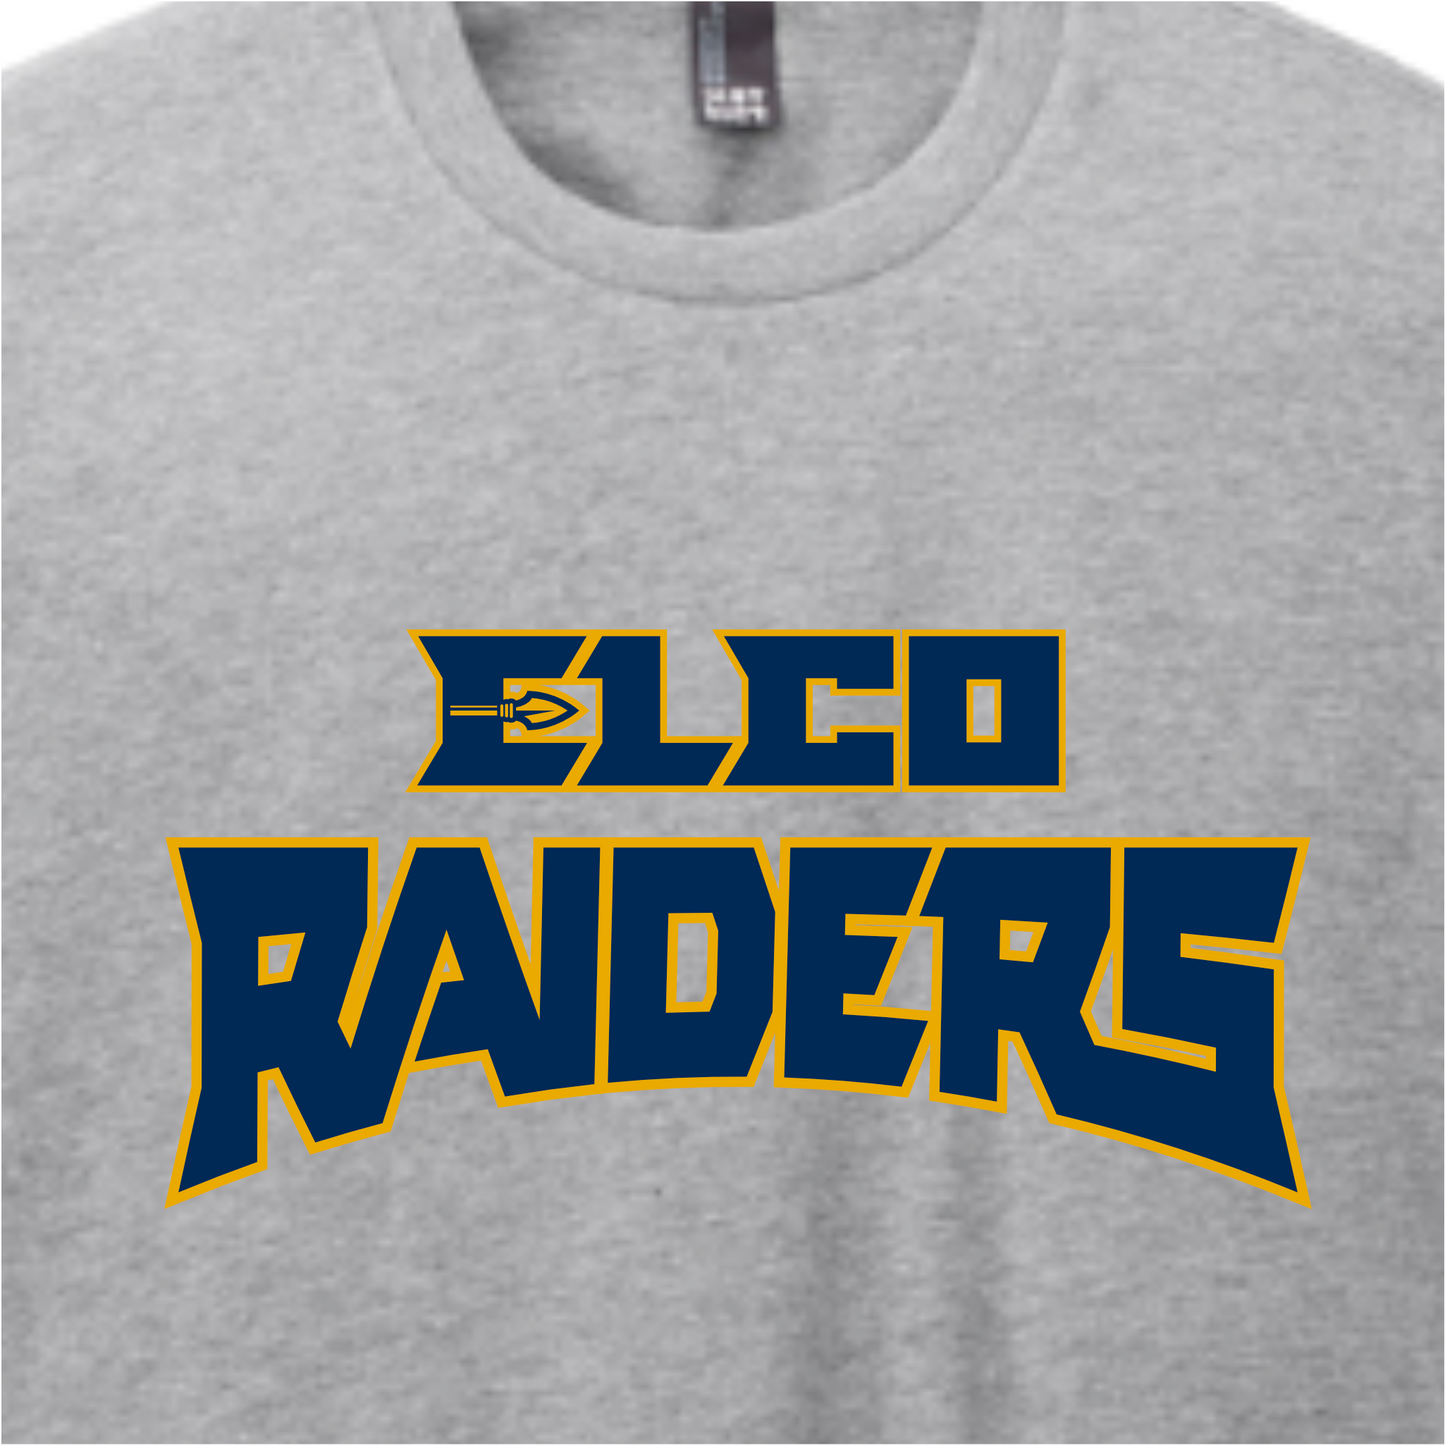 24302 - 03 Elco Raiders Grey Long Sleeve Tee